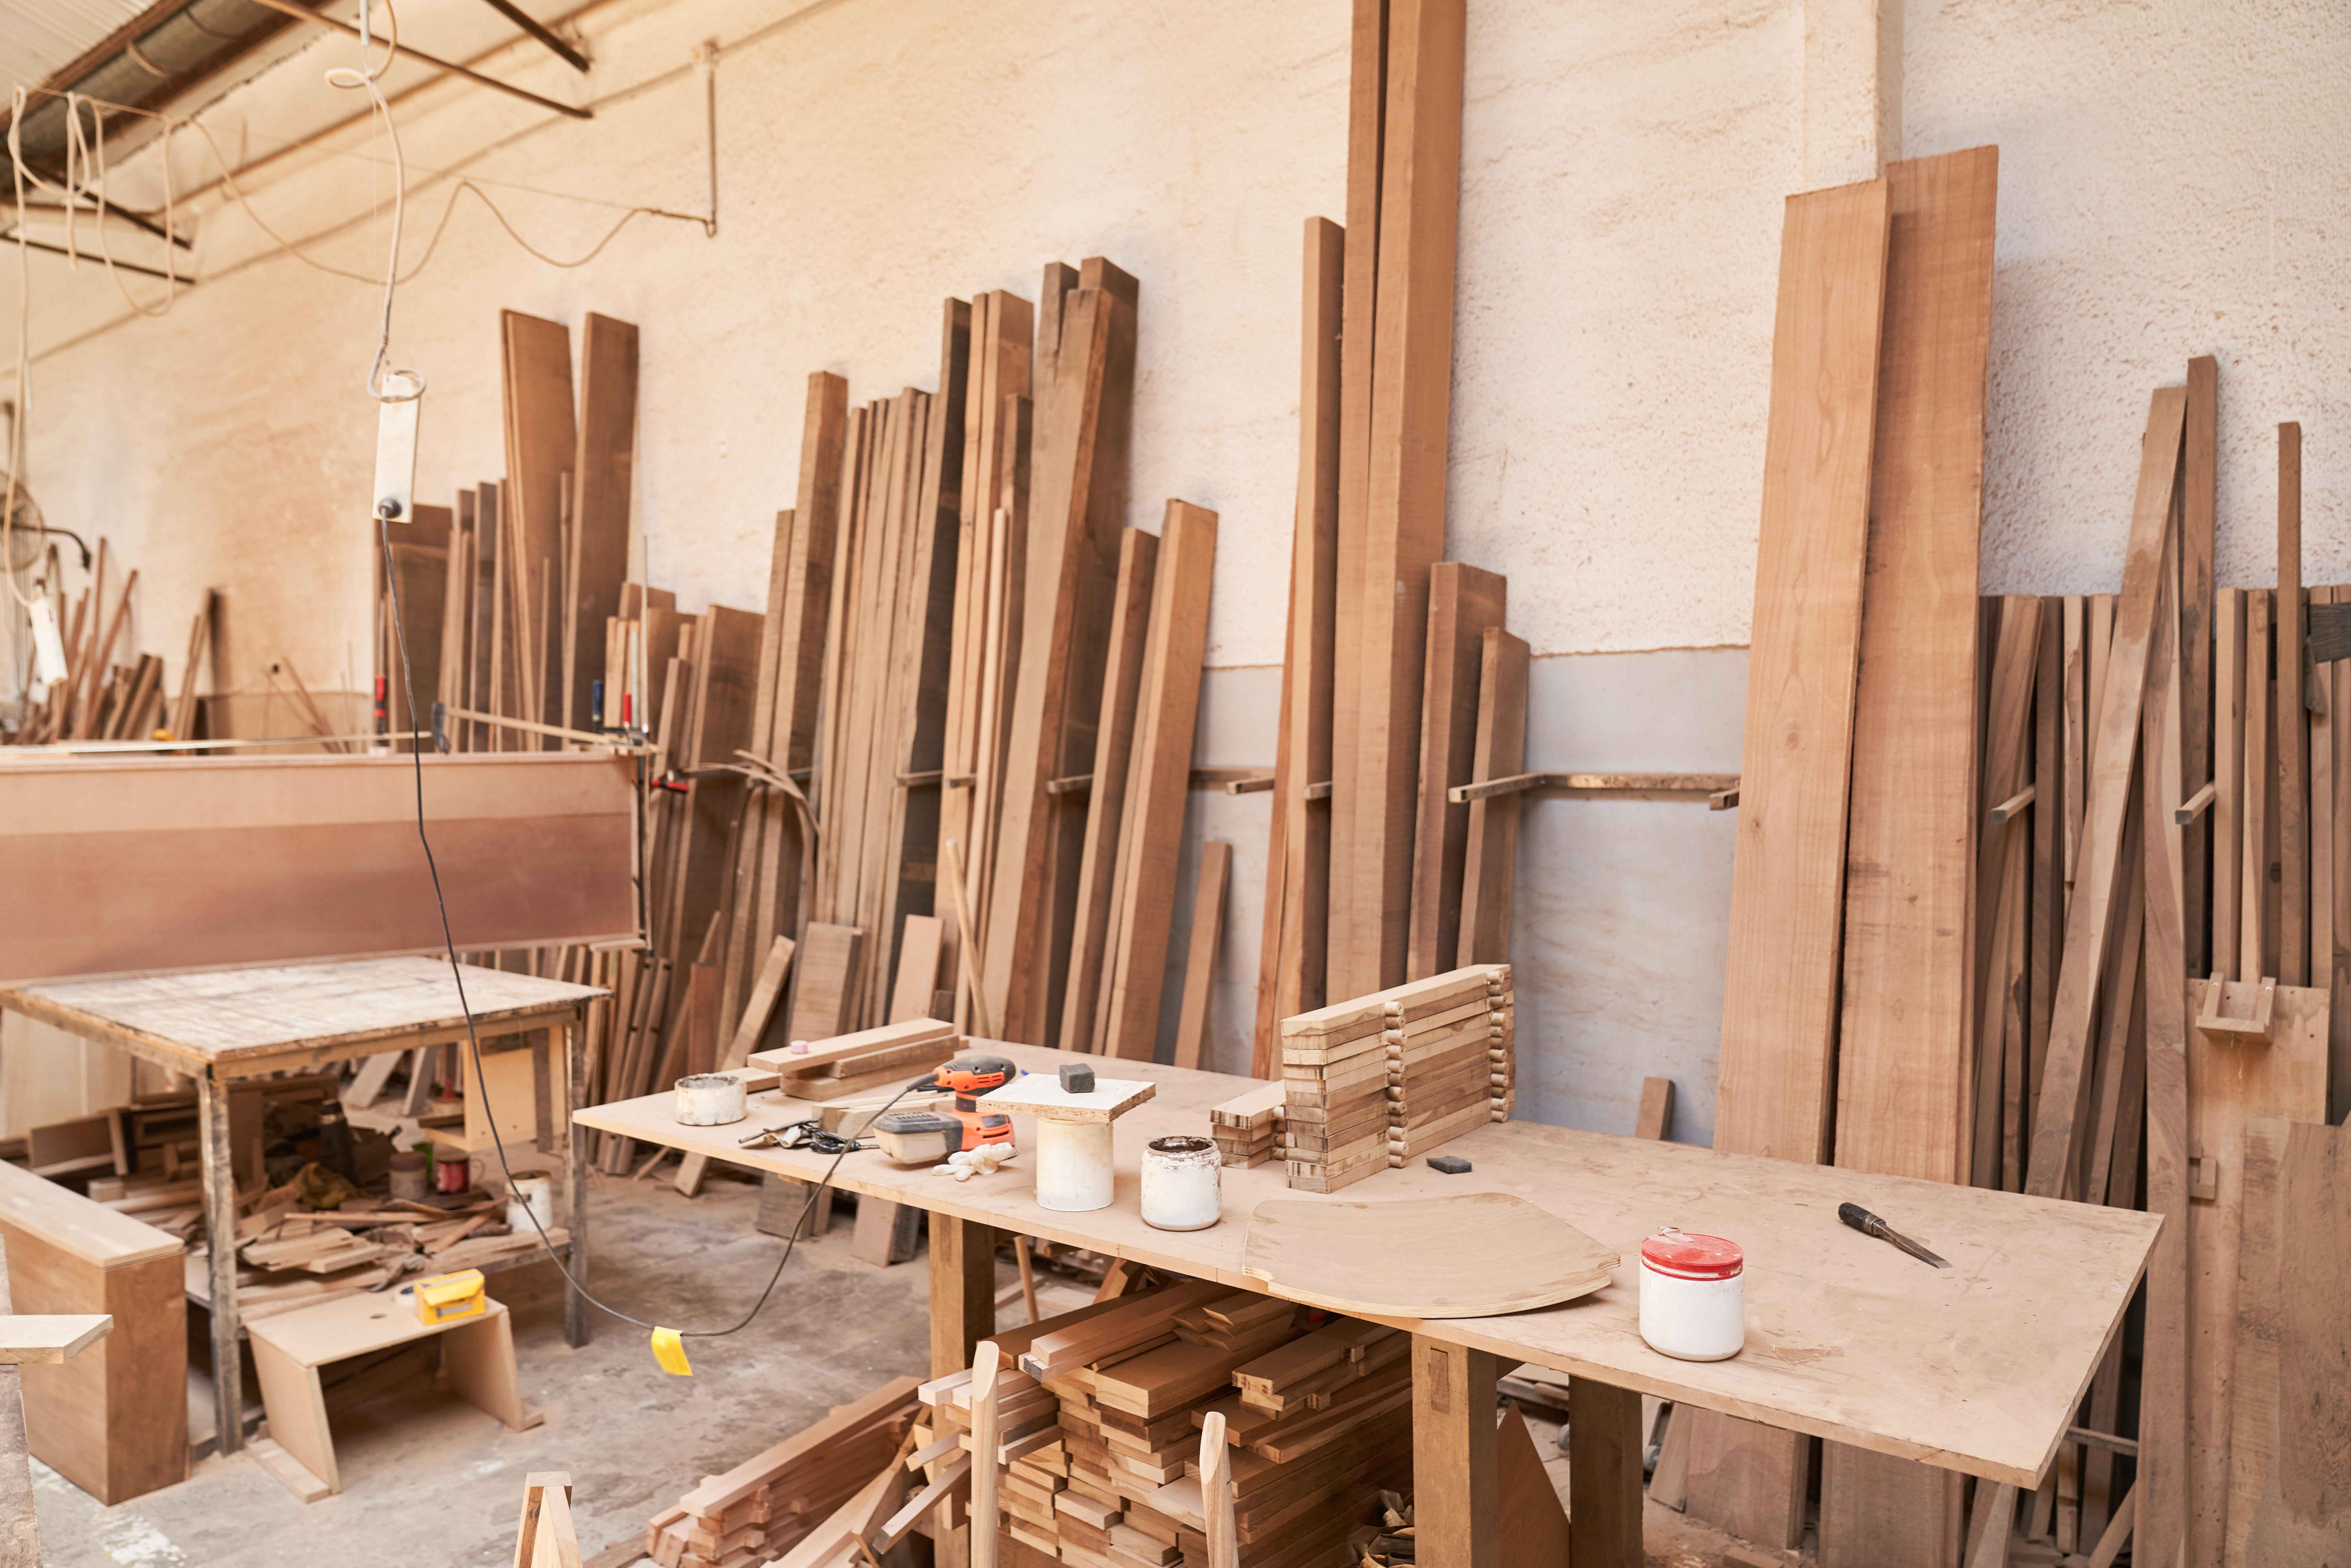 Wood manufacturing | Shutterstock